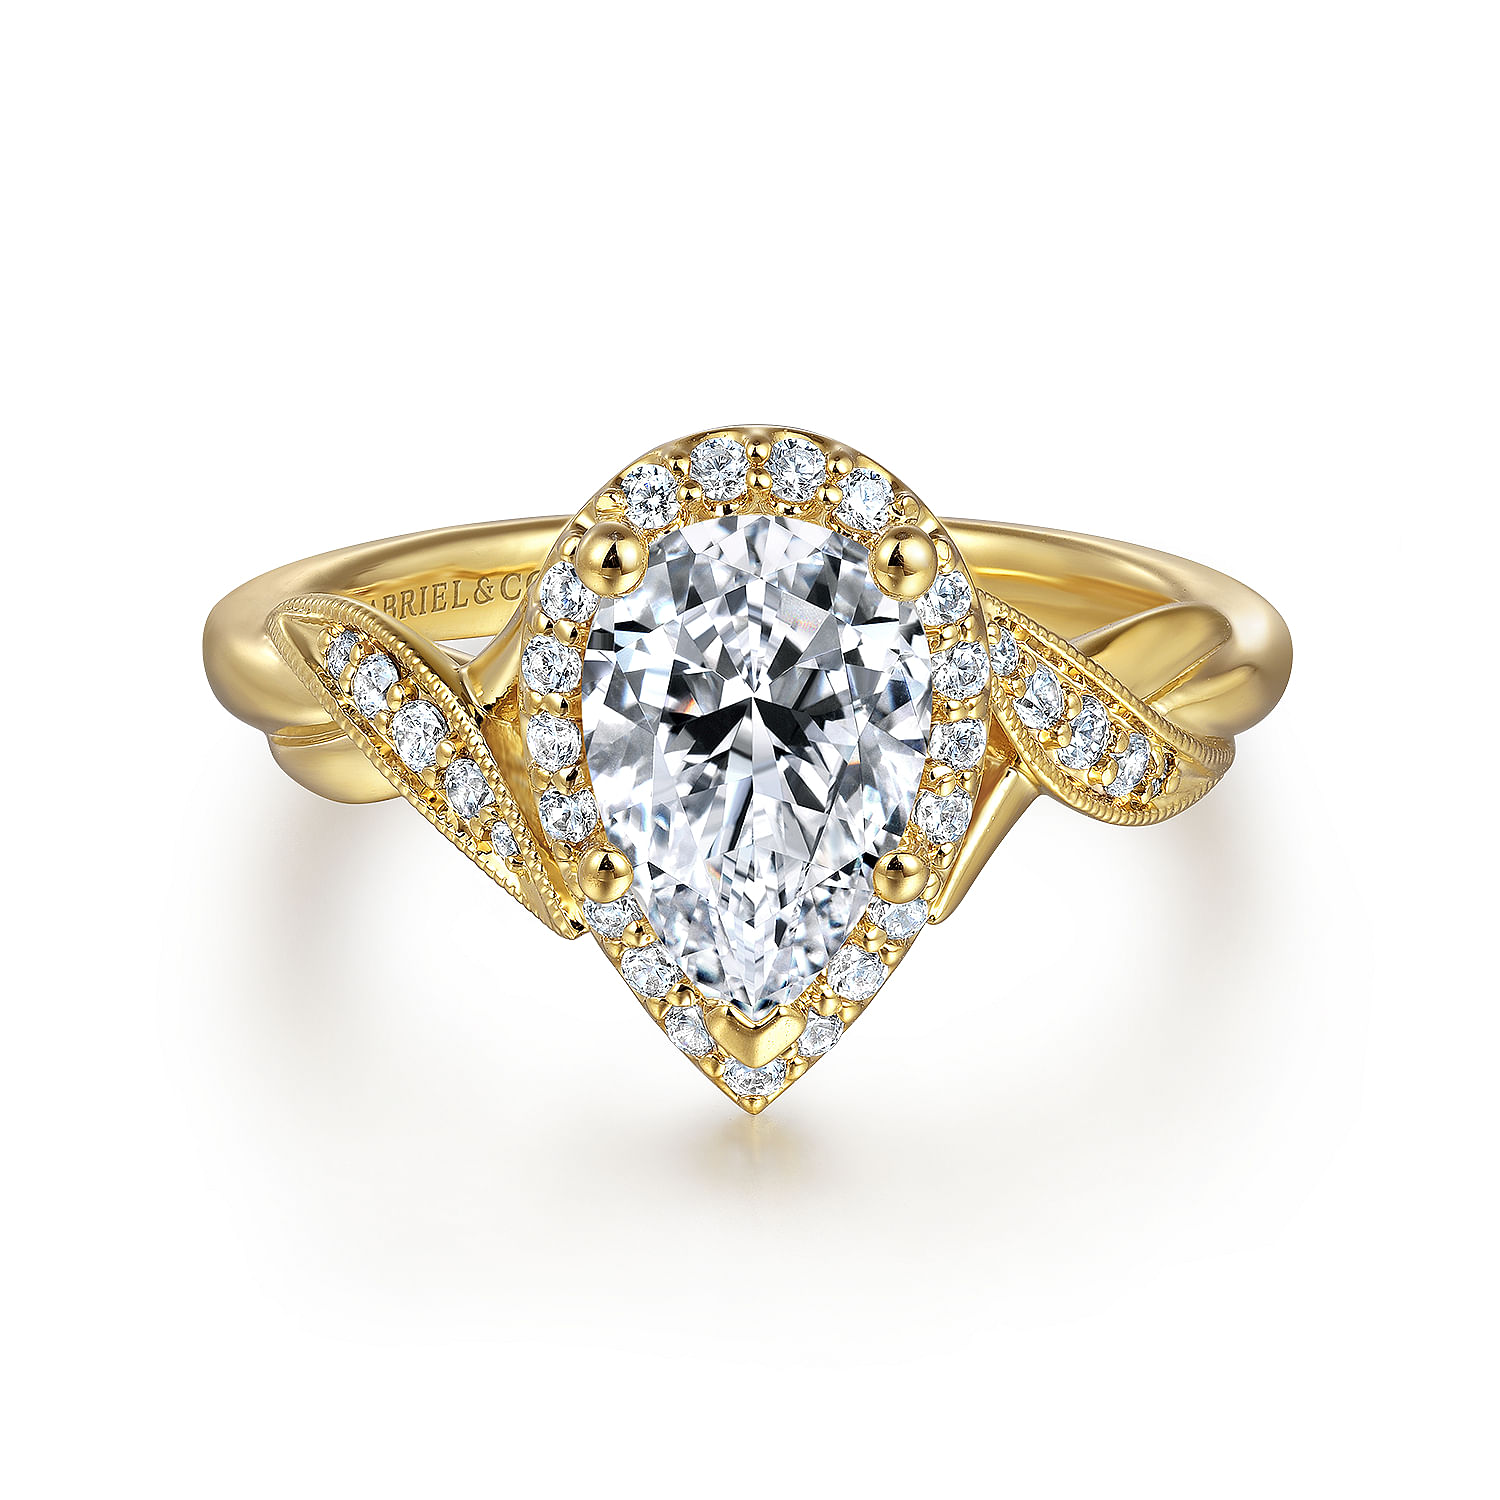 Shae - Vintage Inspired 14K Yellow Gold Pear Shape Halo Diamond Engagement Ring